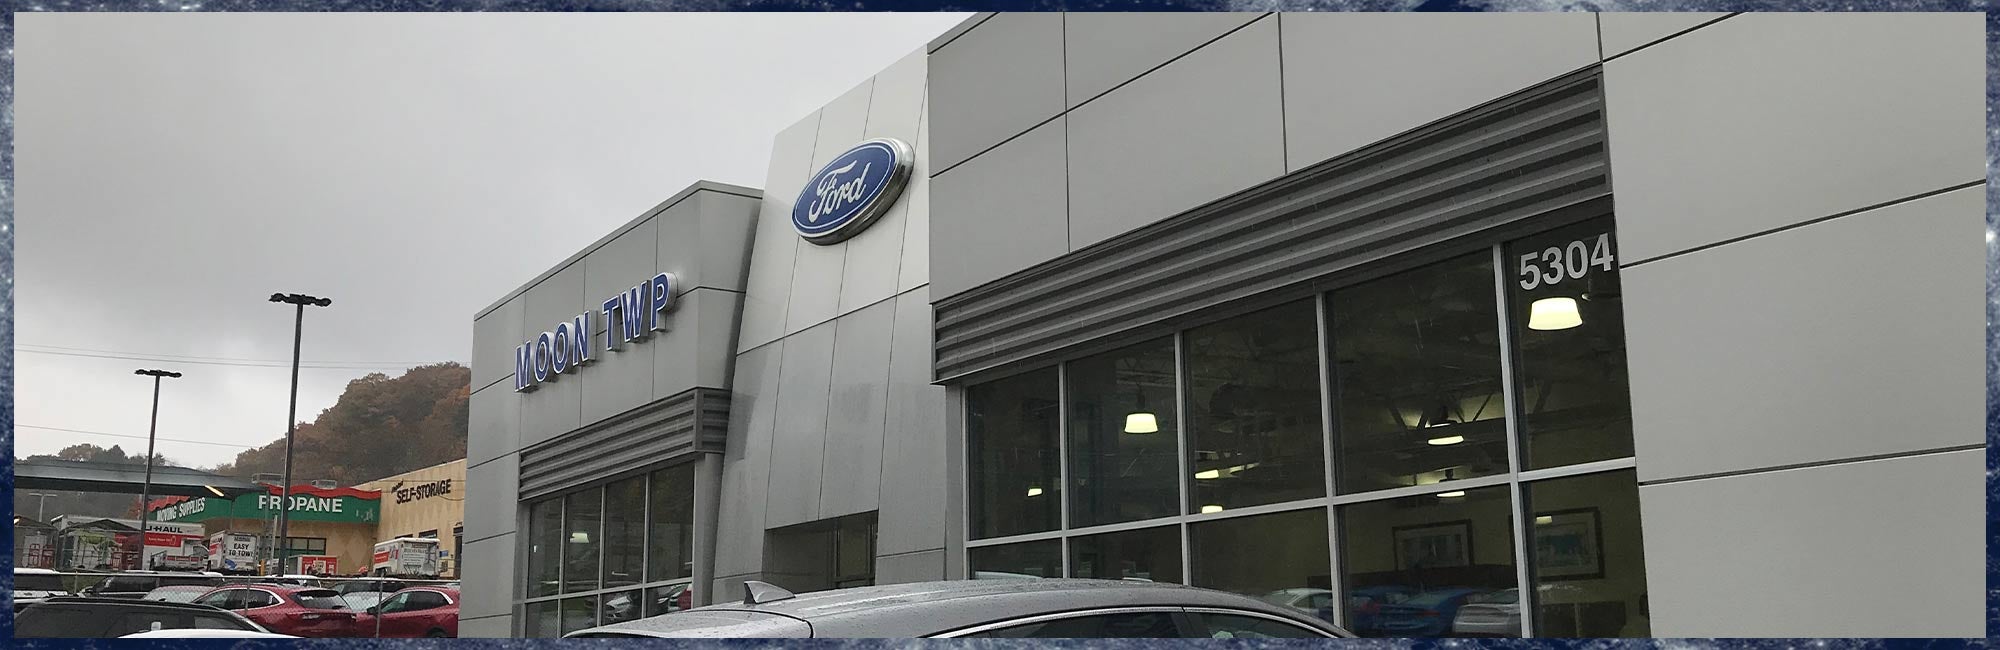 Ford dealership Moon Township , PA